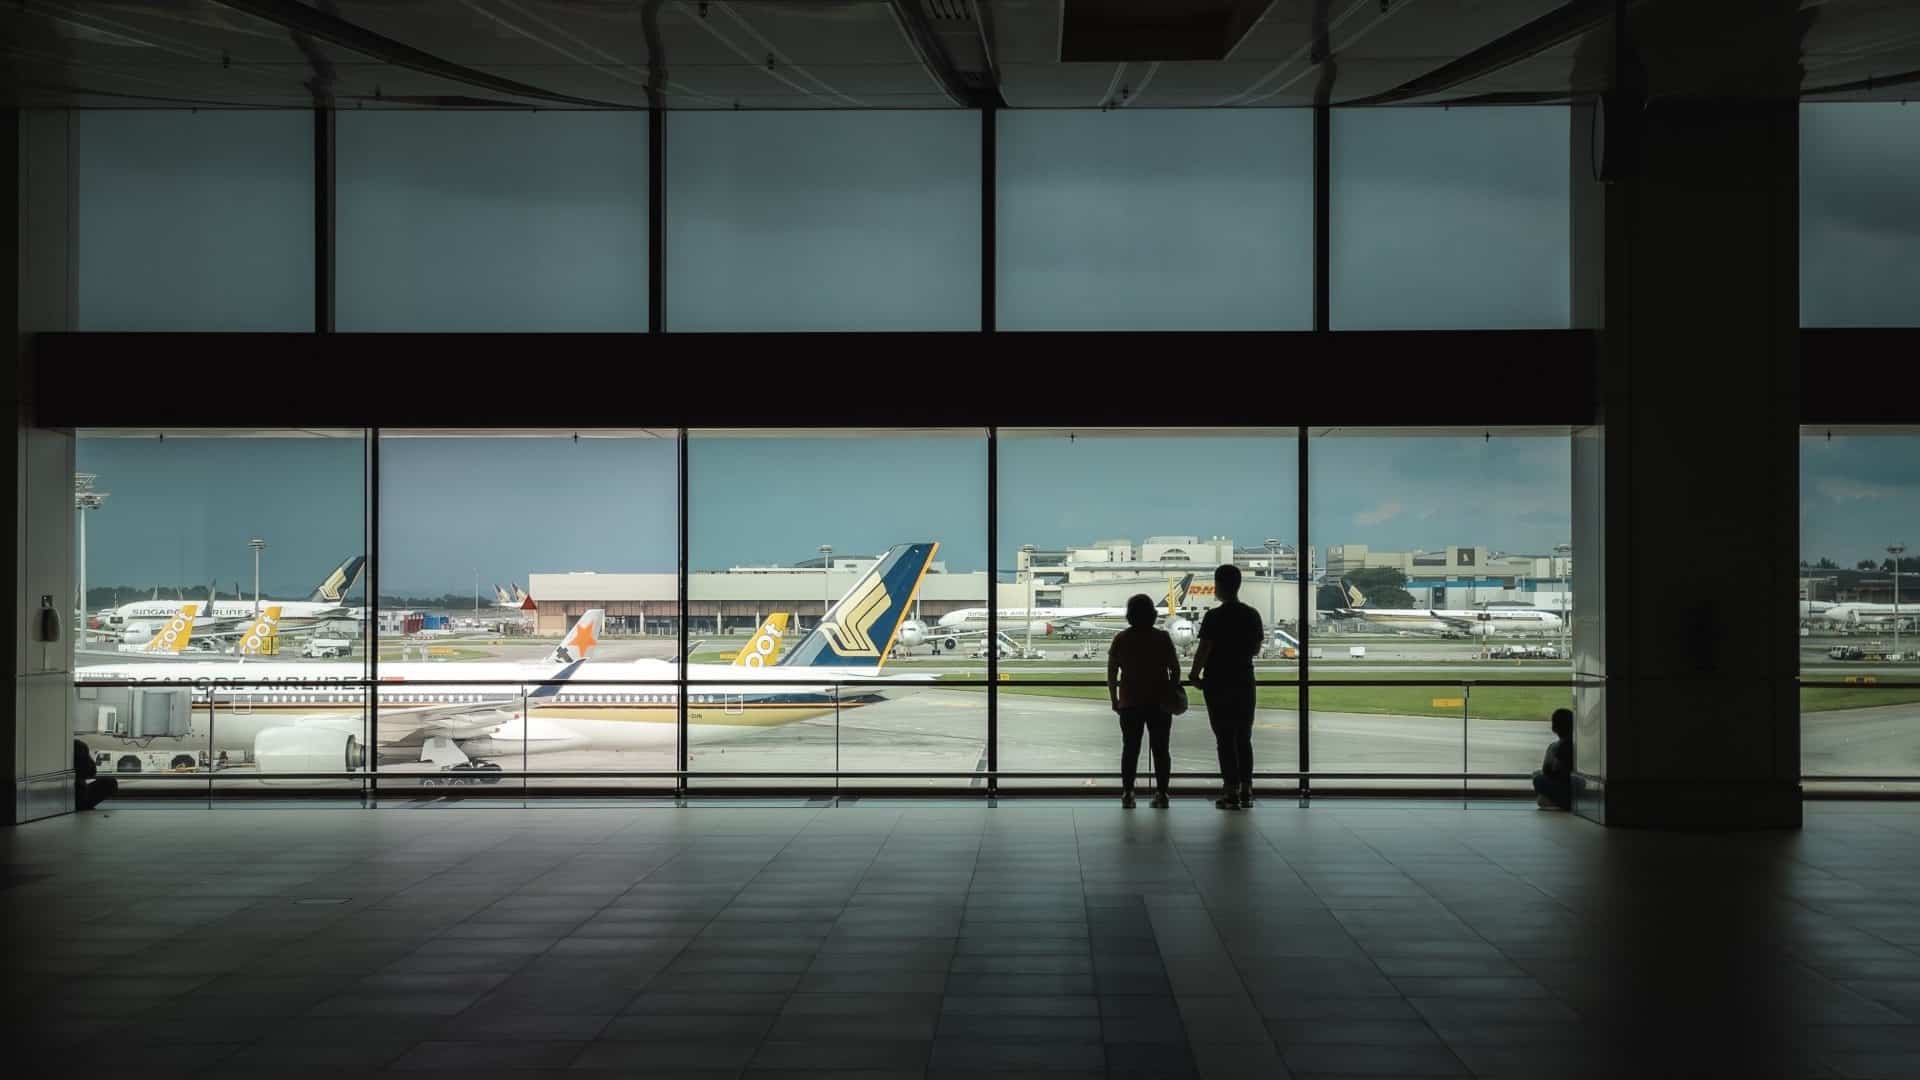 Singapore Airlines Changi Airport